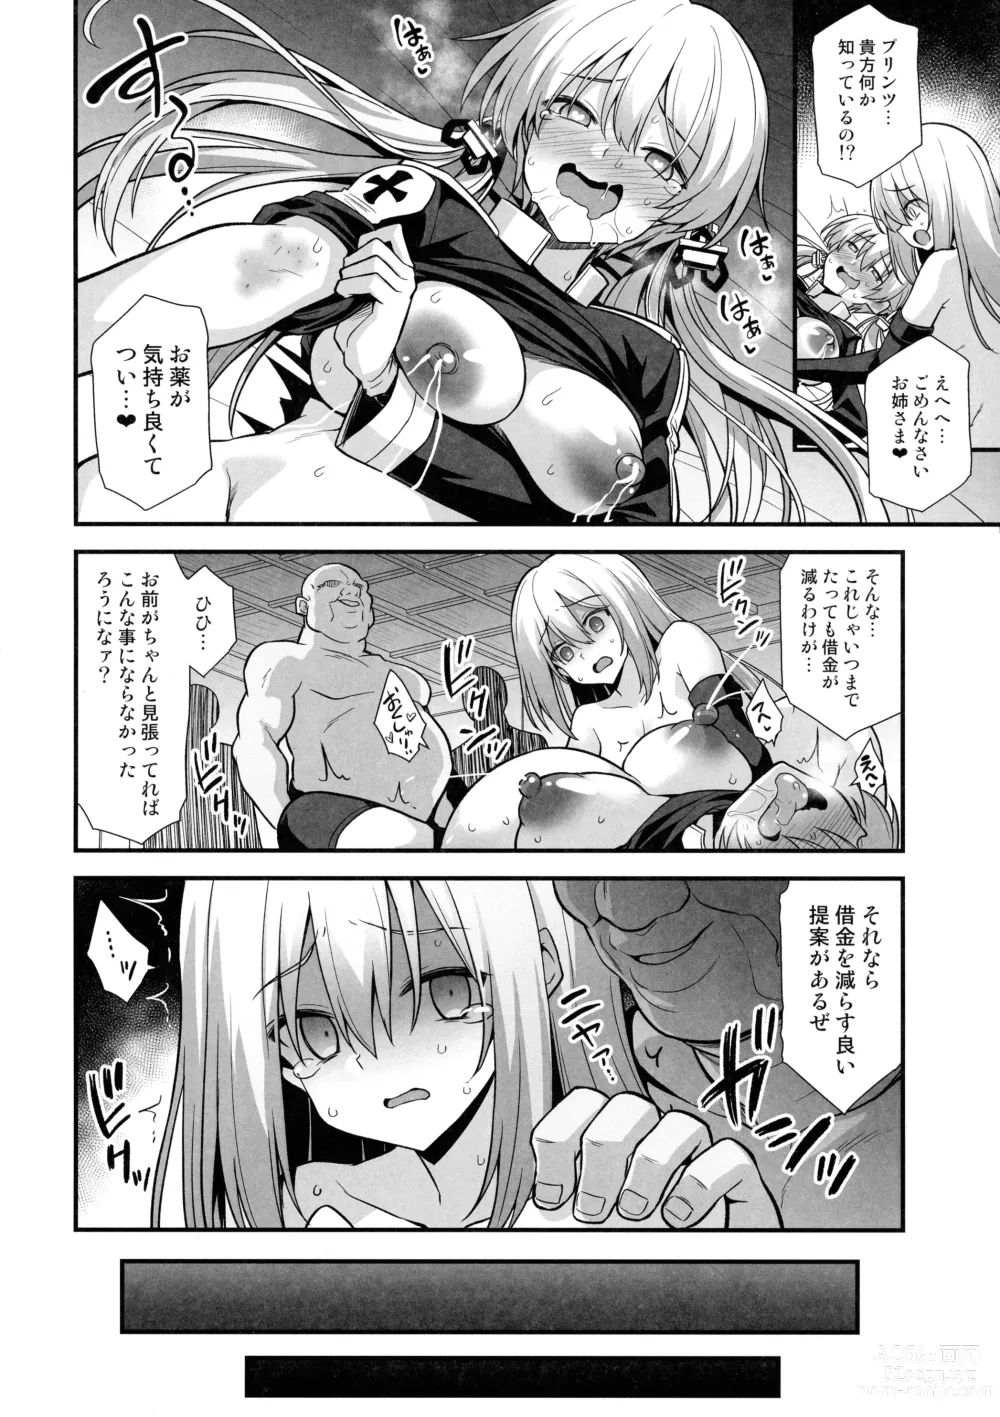 Page 25 of doujinshi Kanmusu Chakunin Mugen Hensai Botai Rankou Prinz Eugen & Bismarck